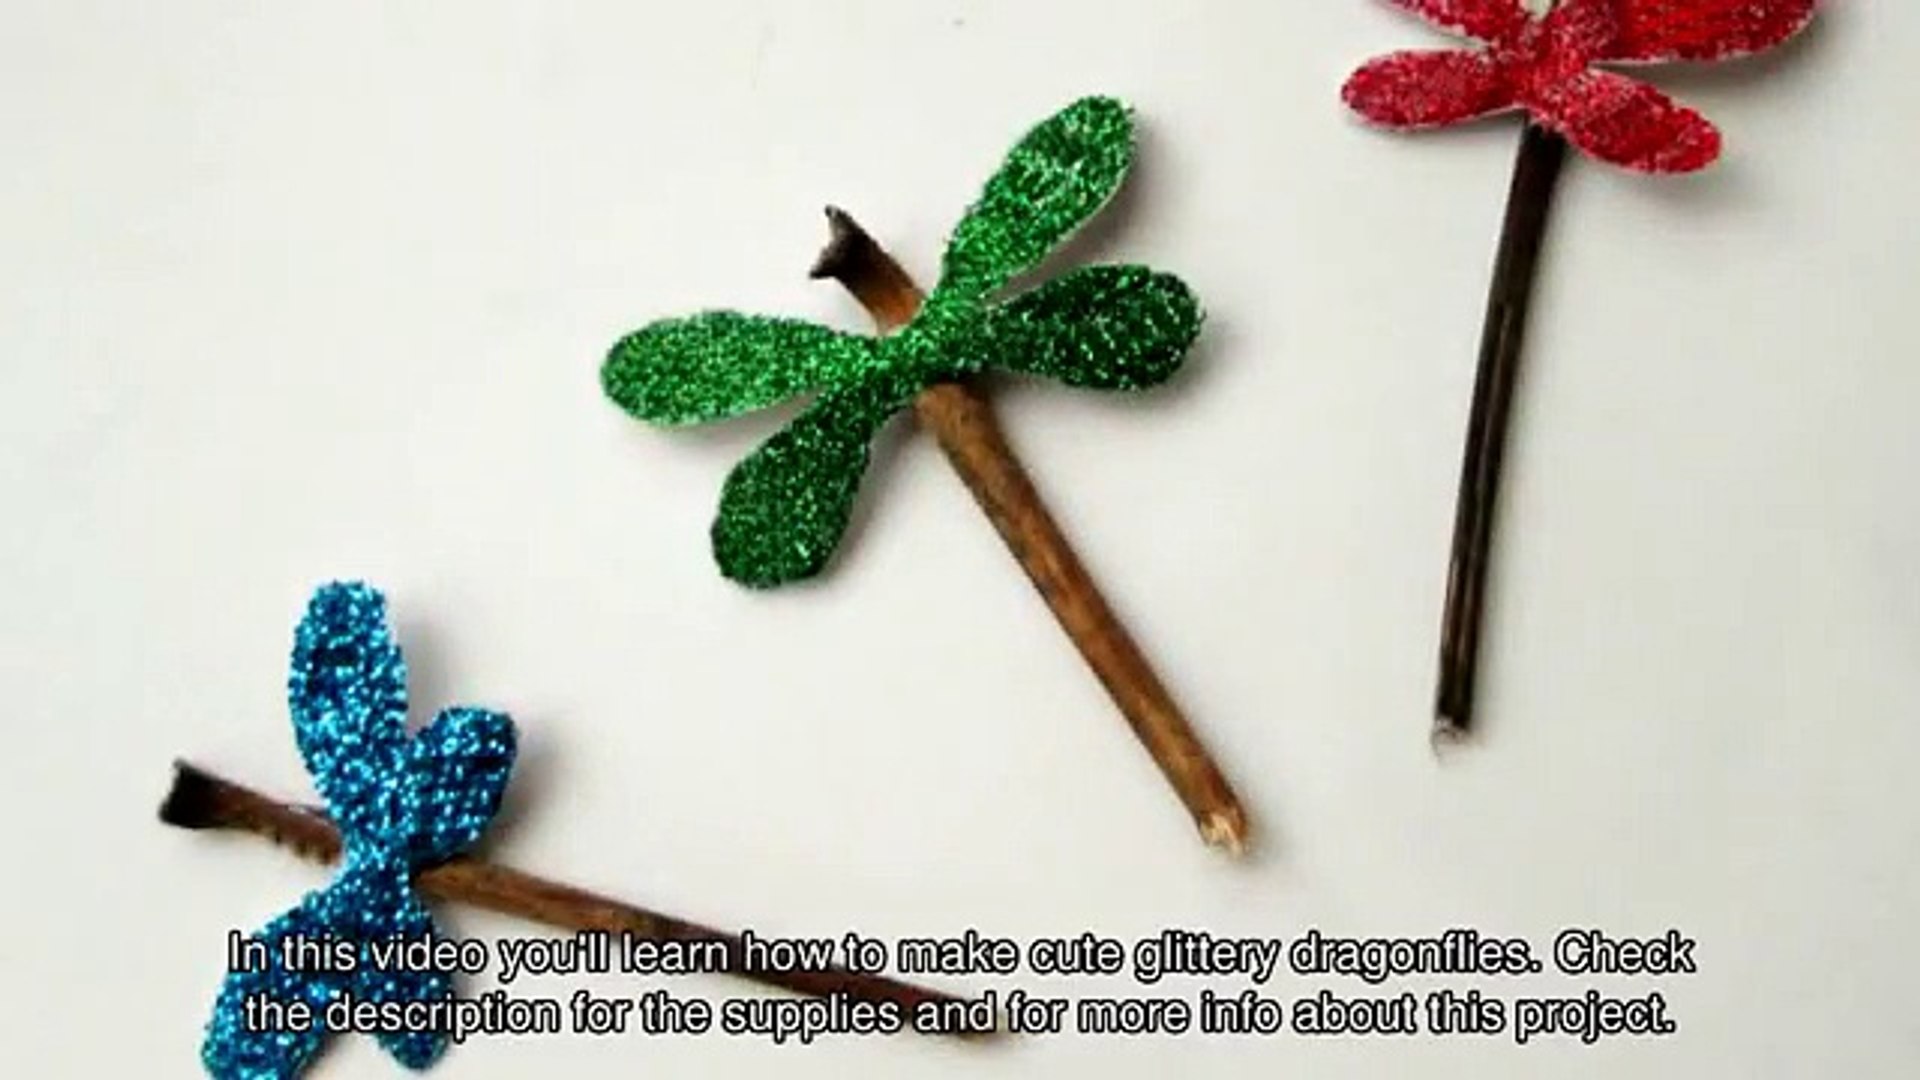 Make Cute Glittery Dragonflies - DIY  - Guidecentral